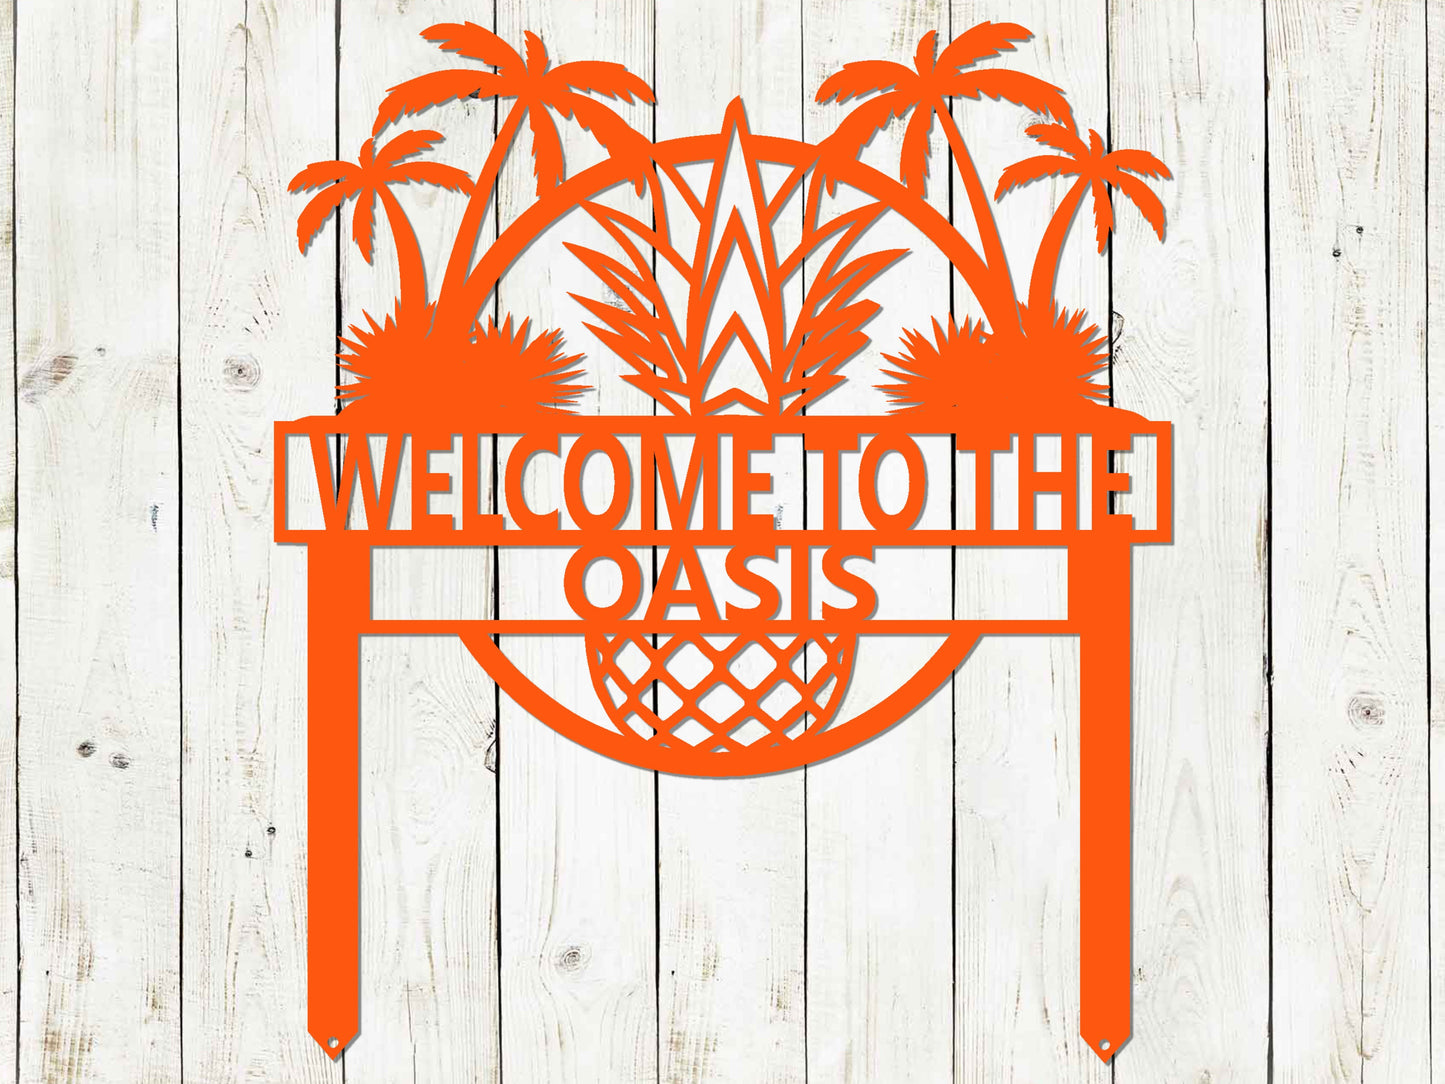 Custom Tropical Garden Sign, Garden Sign, Beach House, Garden Stake, Custom Beach Sign, Metal Yard Art, Outdoor Sign, Beach House Sign